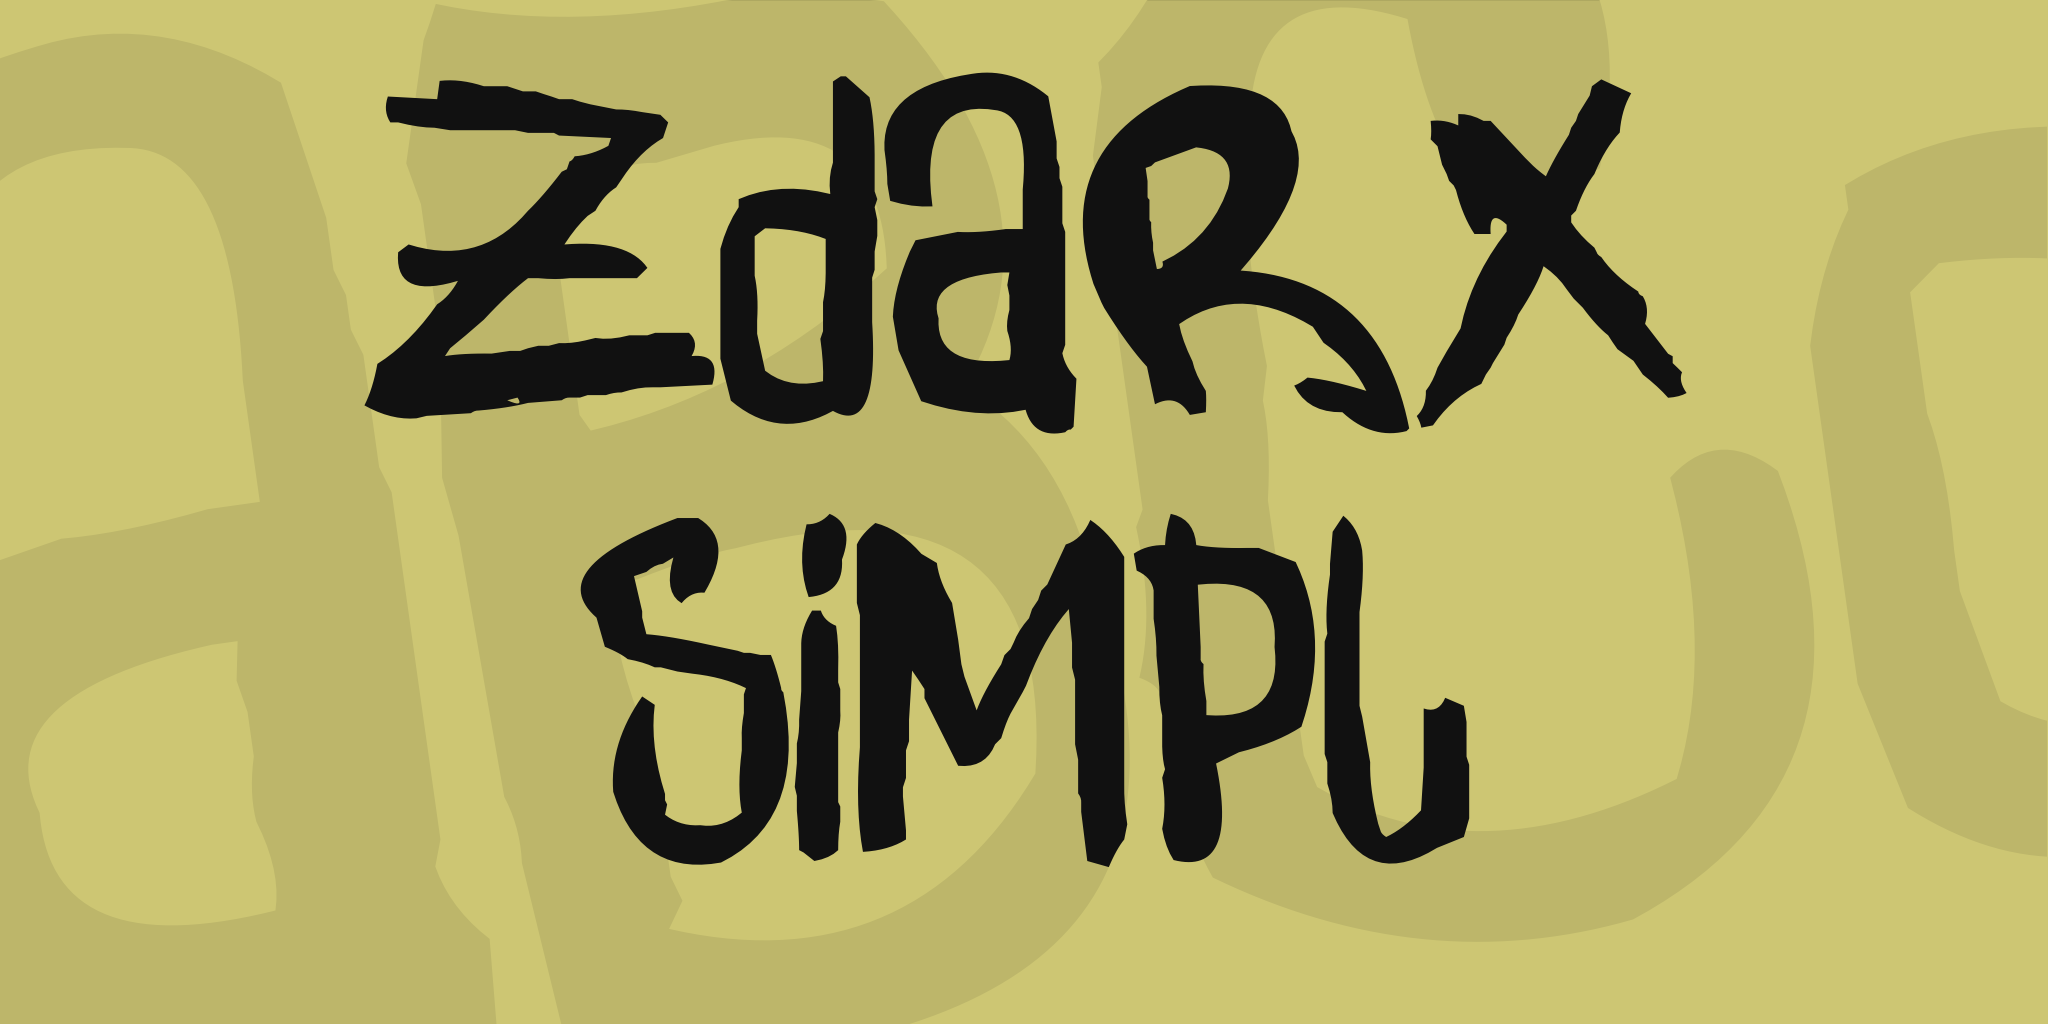 Zdarx Simpl